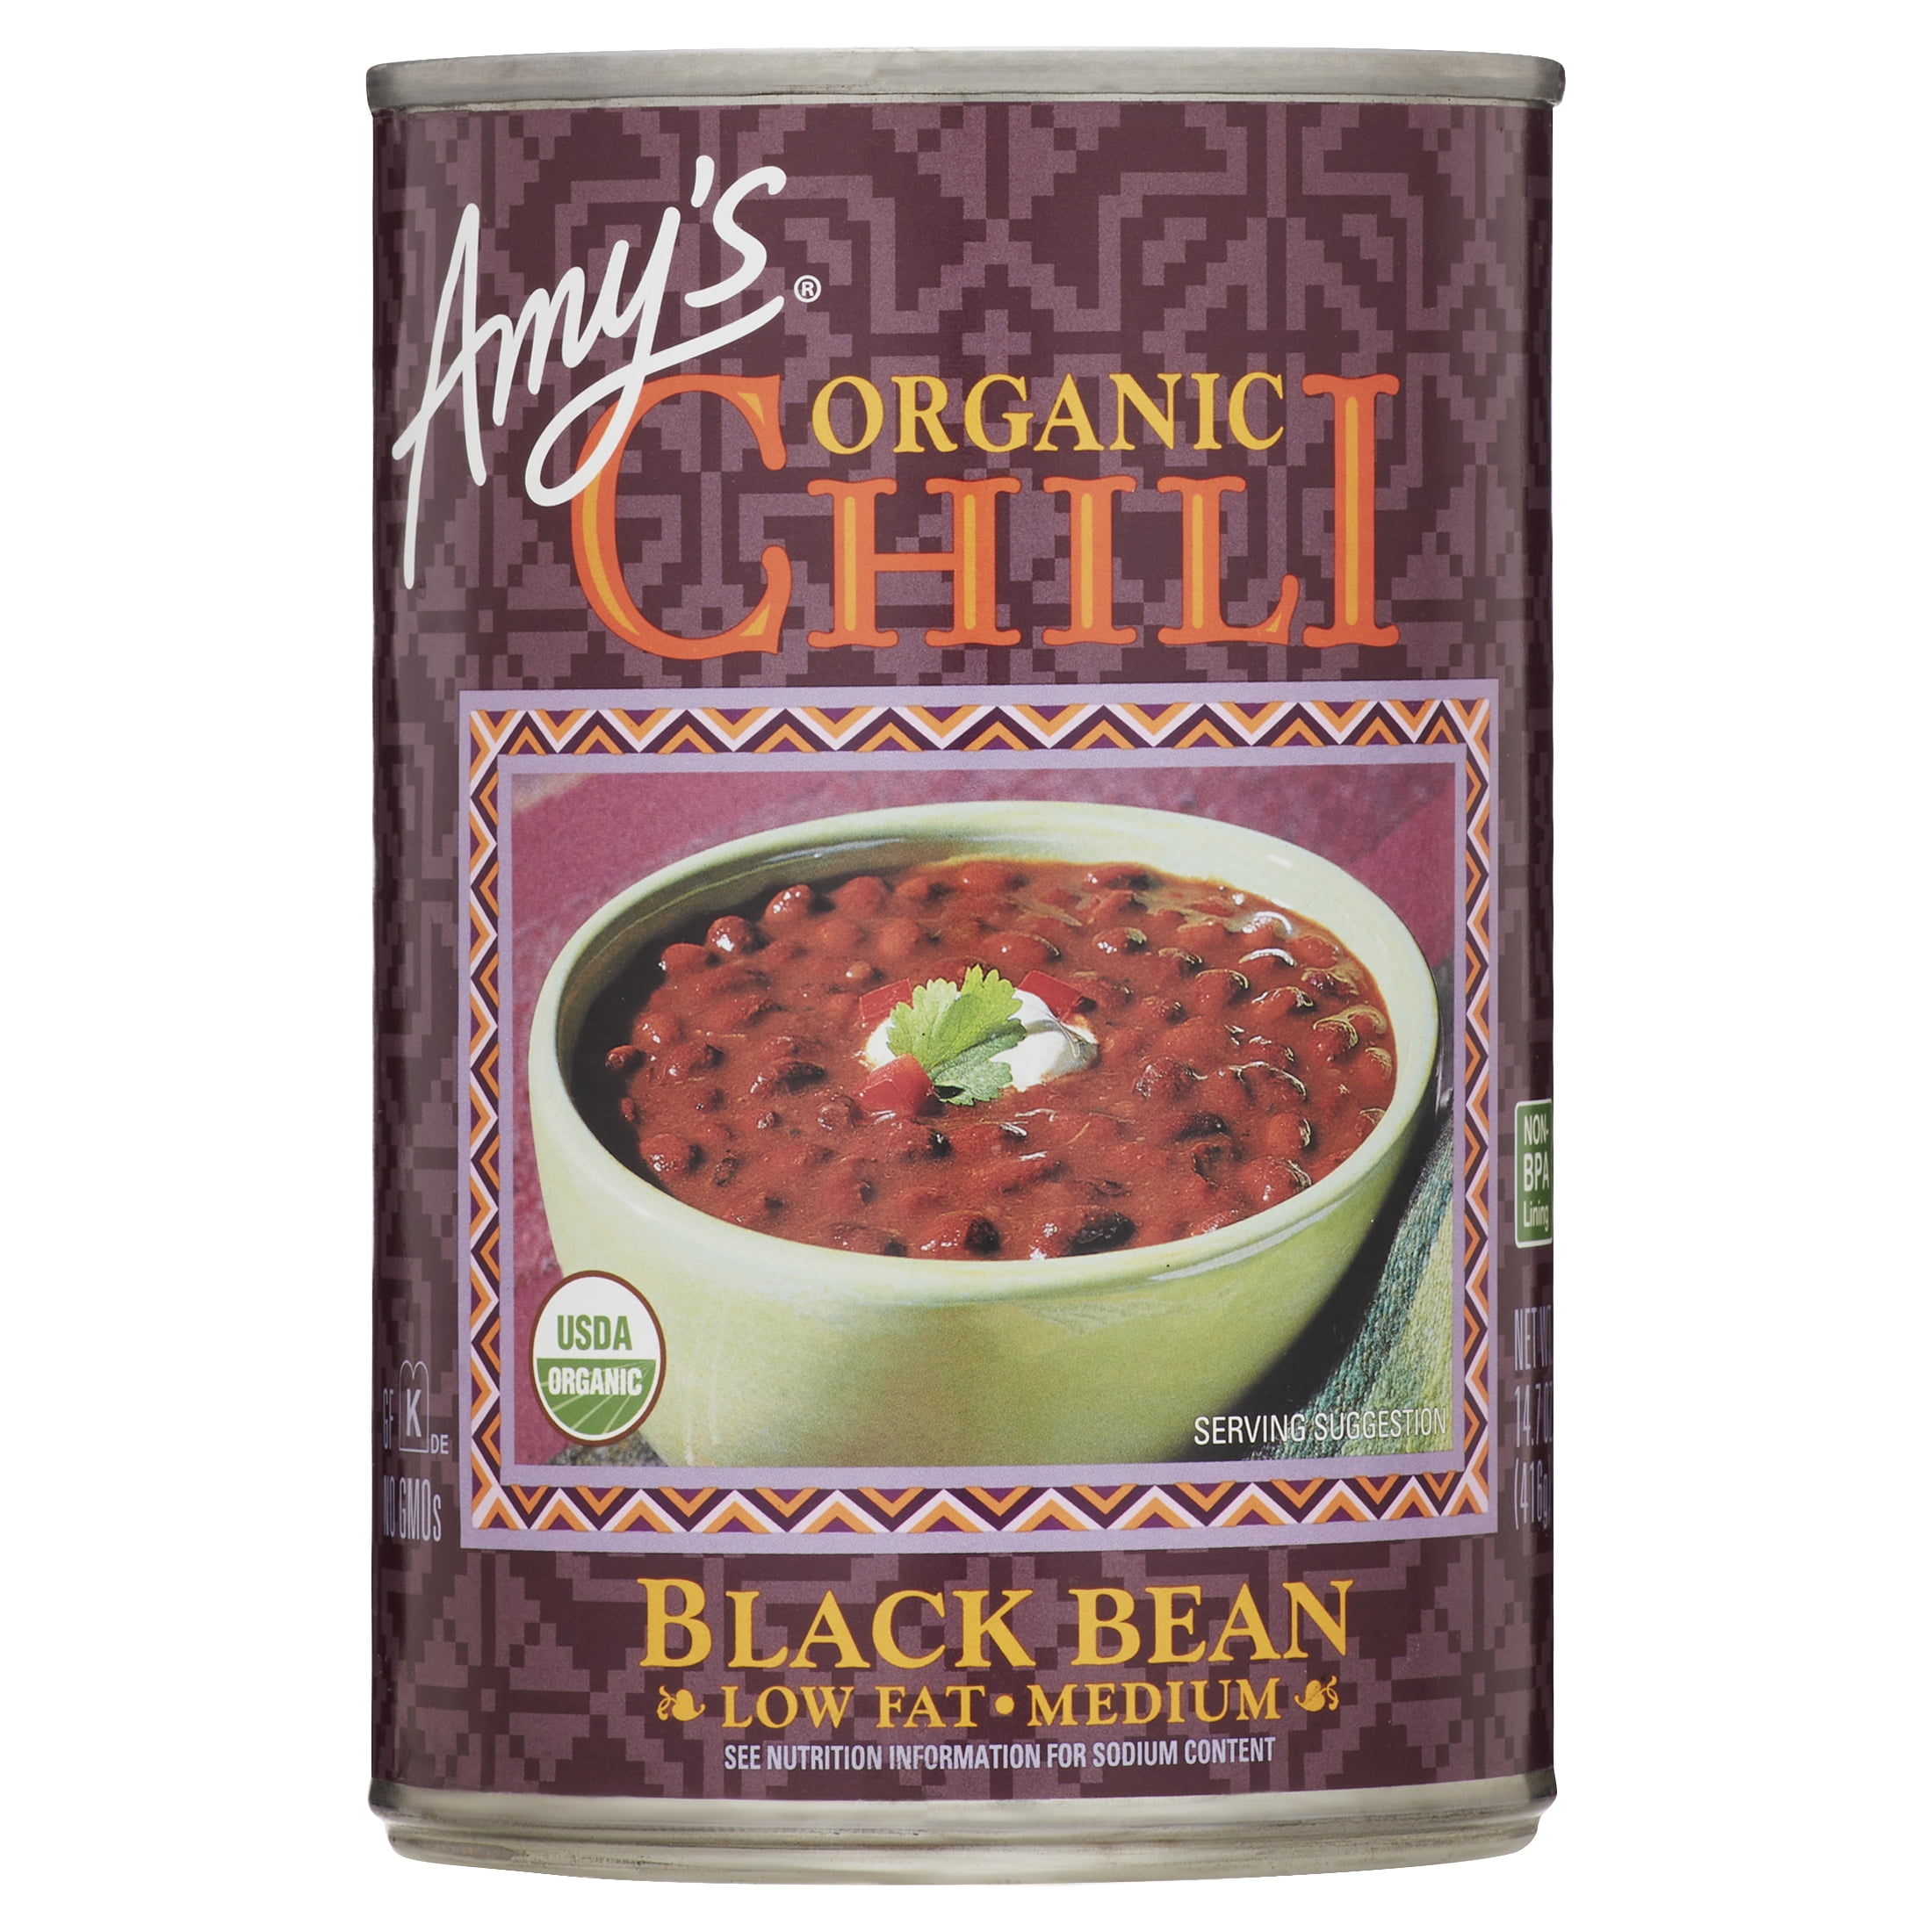 Amy's Kitchen Organic Medium Black Bean Chili, Low-Fat - 14.7oz